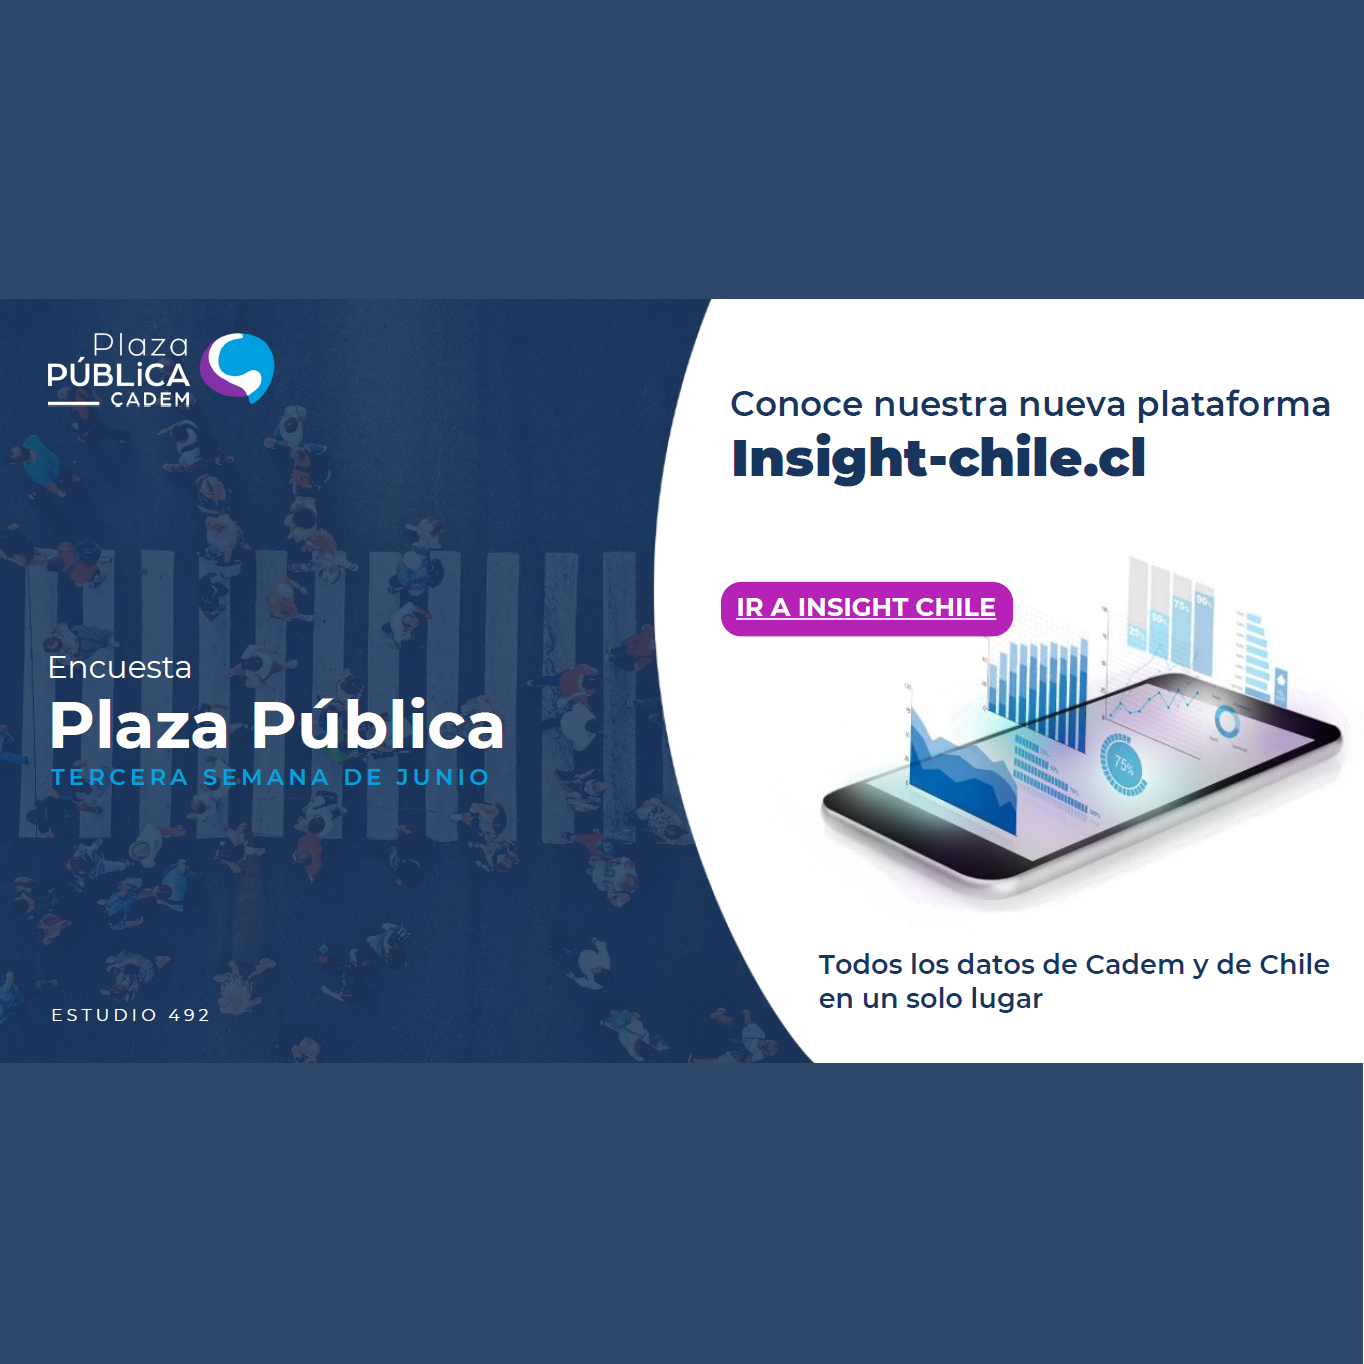 Estudio: Encuesta Plaza Pública – 3ra semana de junio